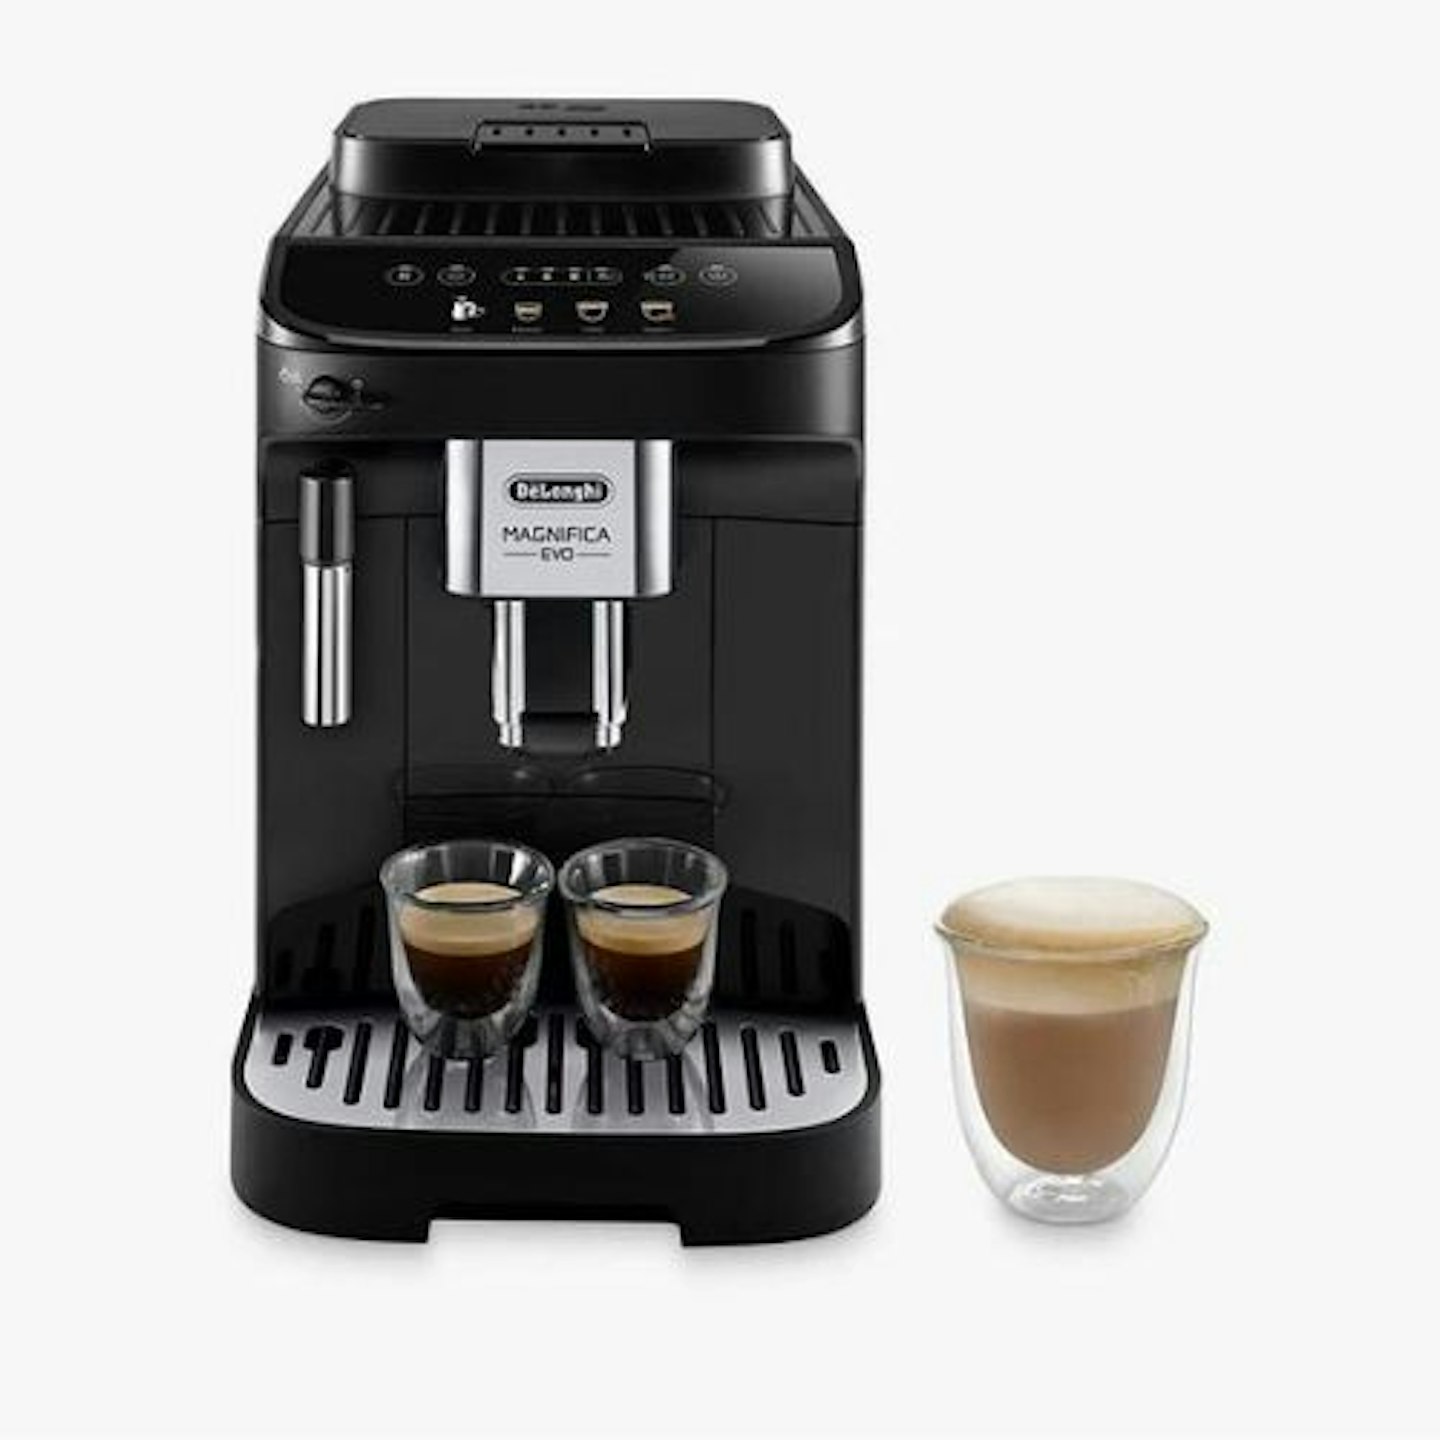 De'Longhi Magnifica ECAM290.22.B Evo Fully Automatic Bean-to-Cup Coffee Machine